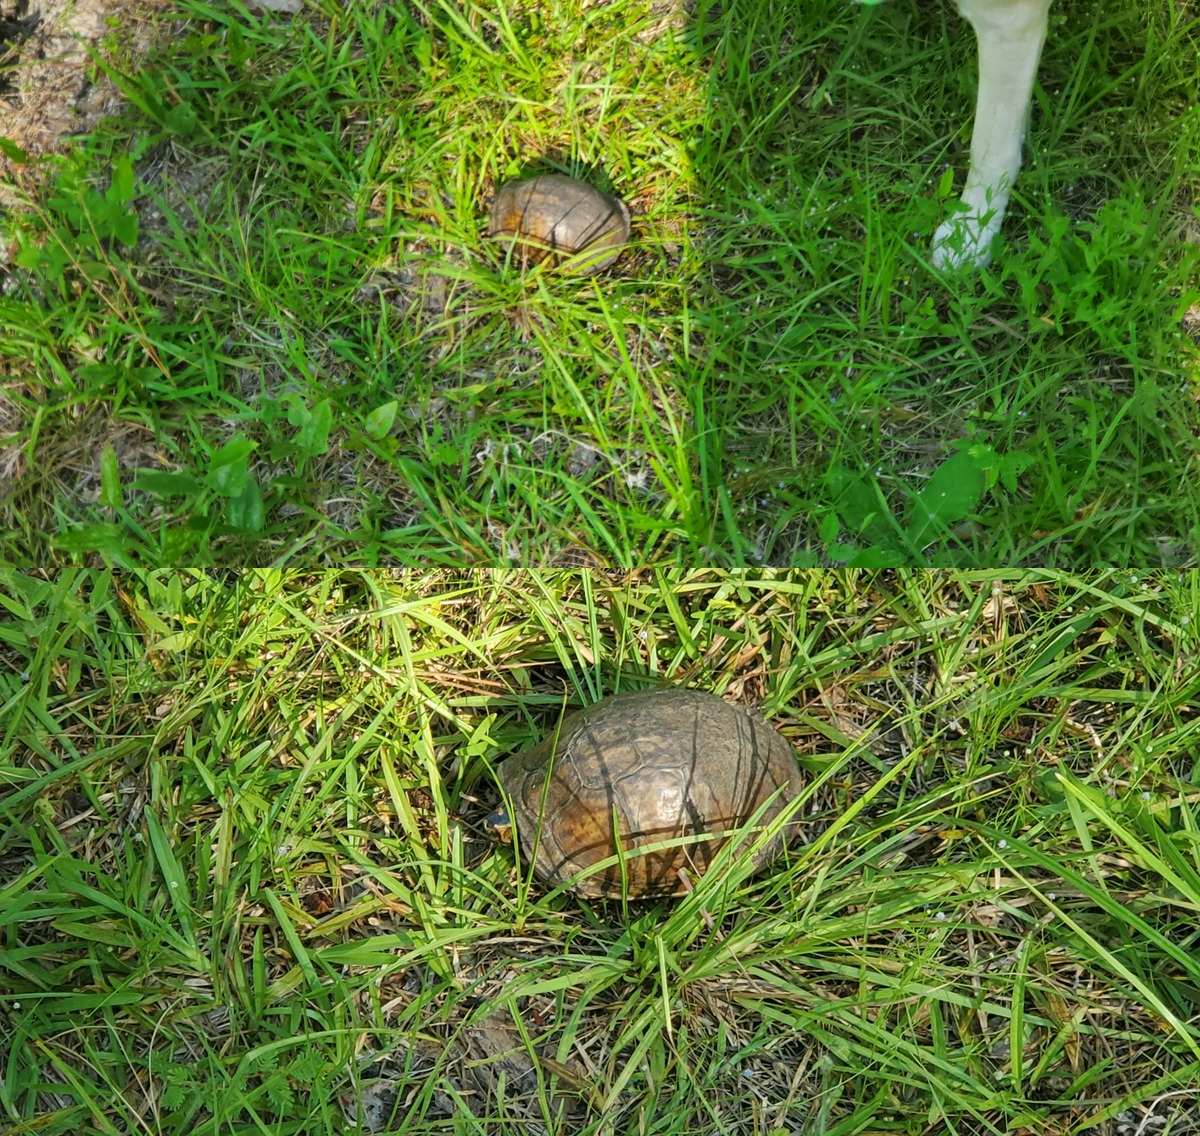 Turtle, dog leg